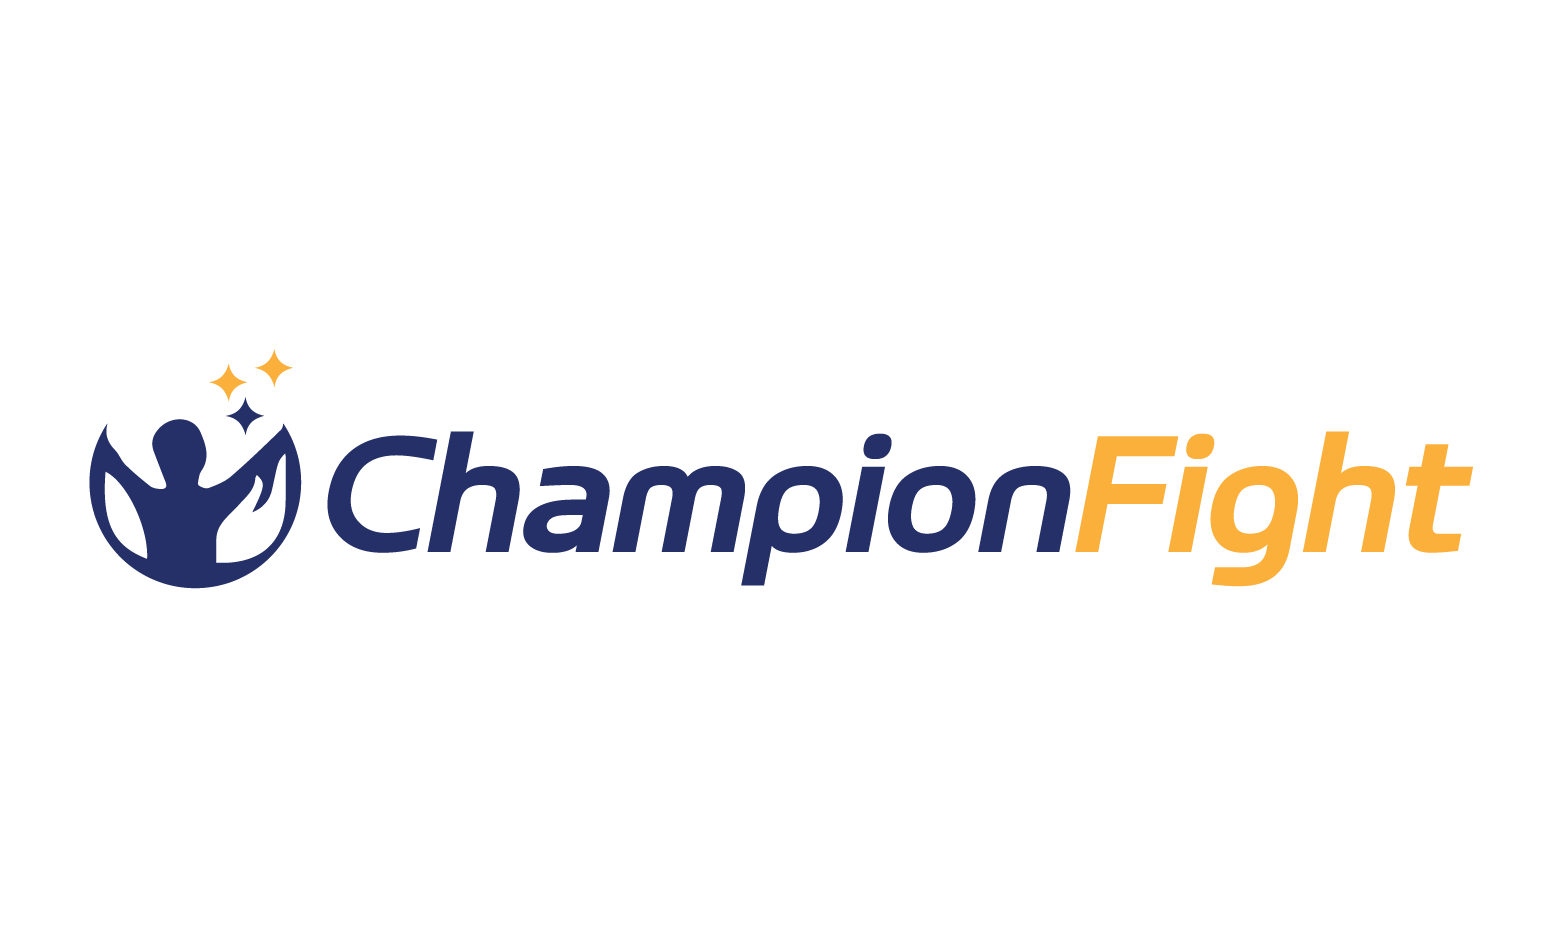 ChampionFight.com - Creative brandable domain for sale